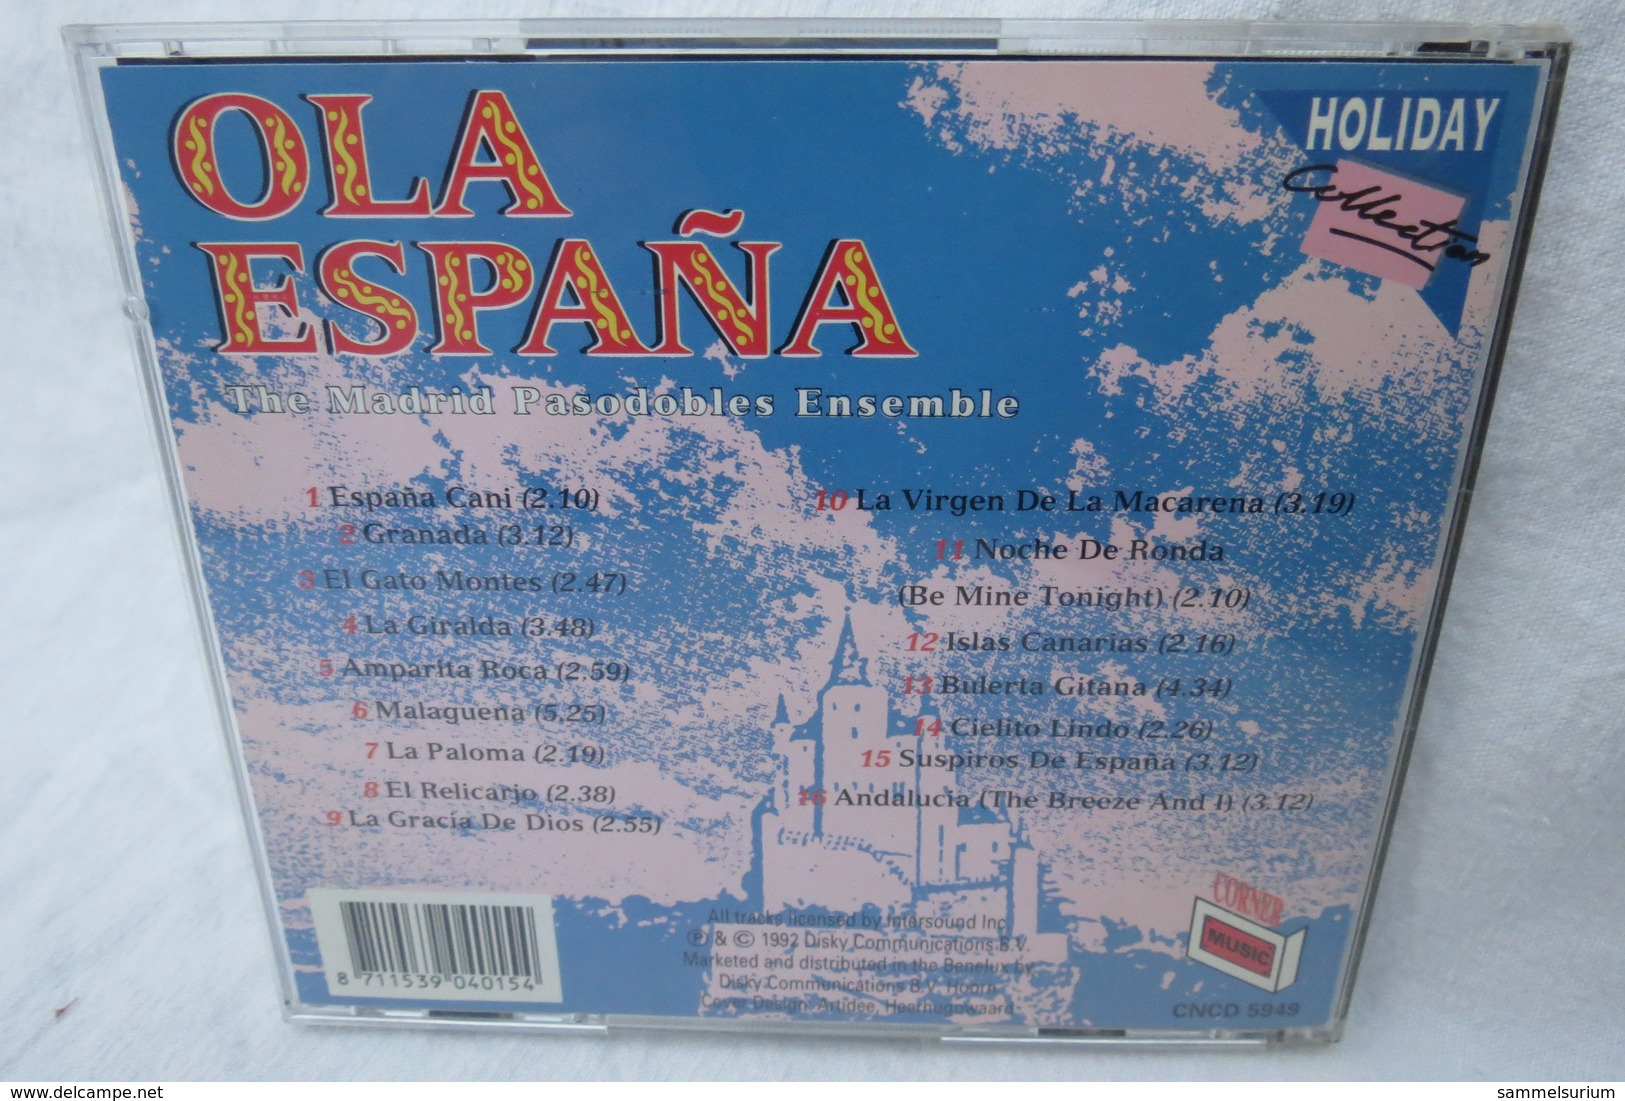 CD "The Madrid Pasodobles Ensemble" Ola Espana - Andere - Spaans